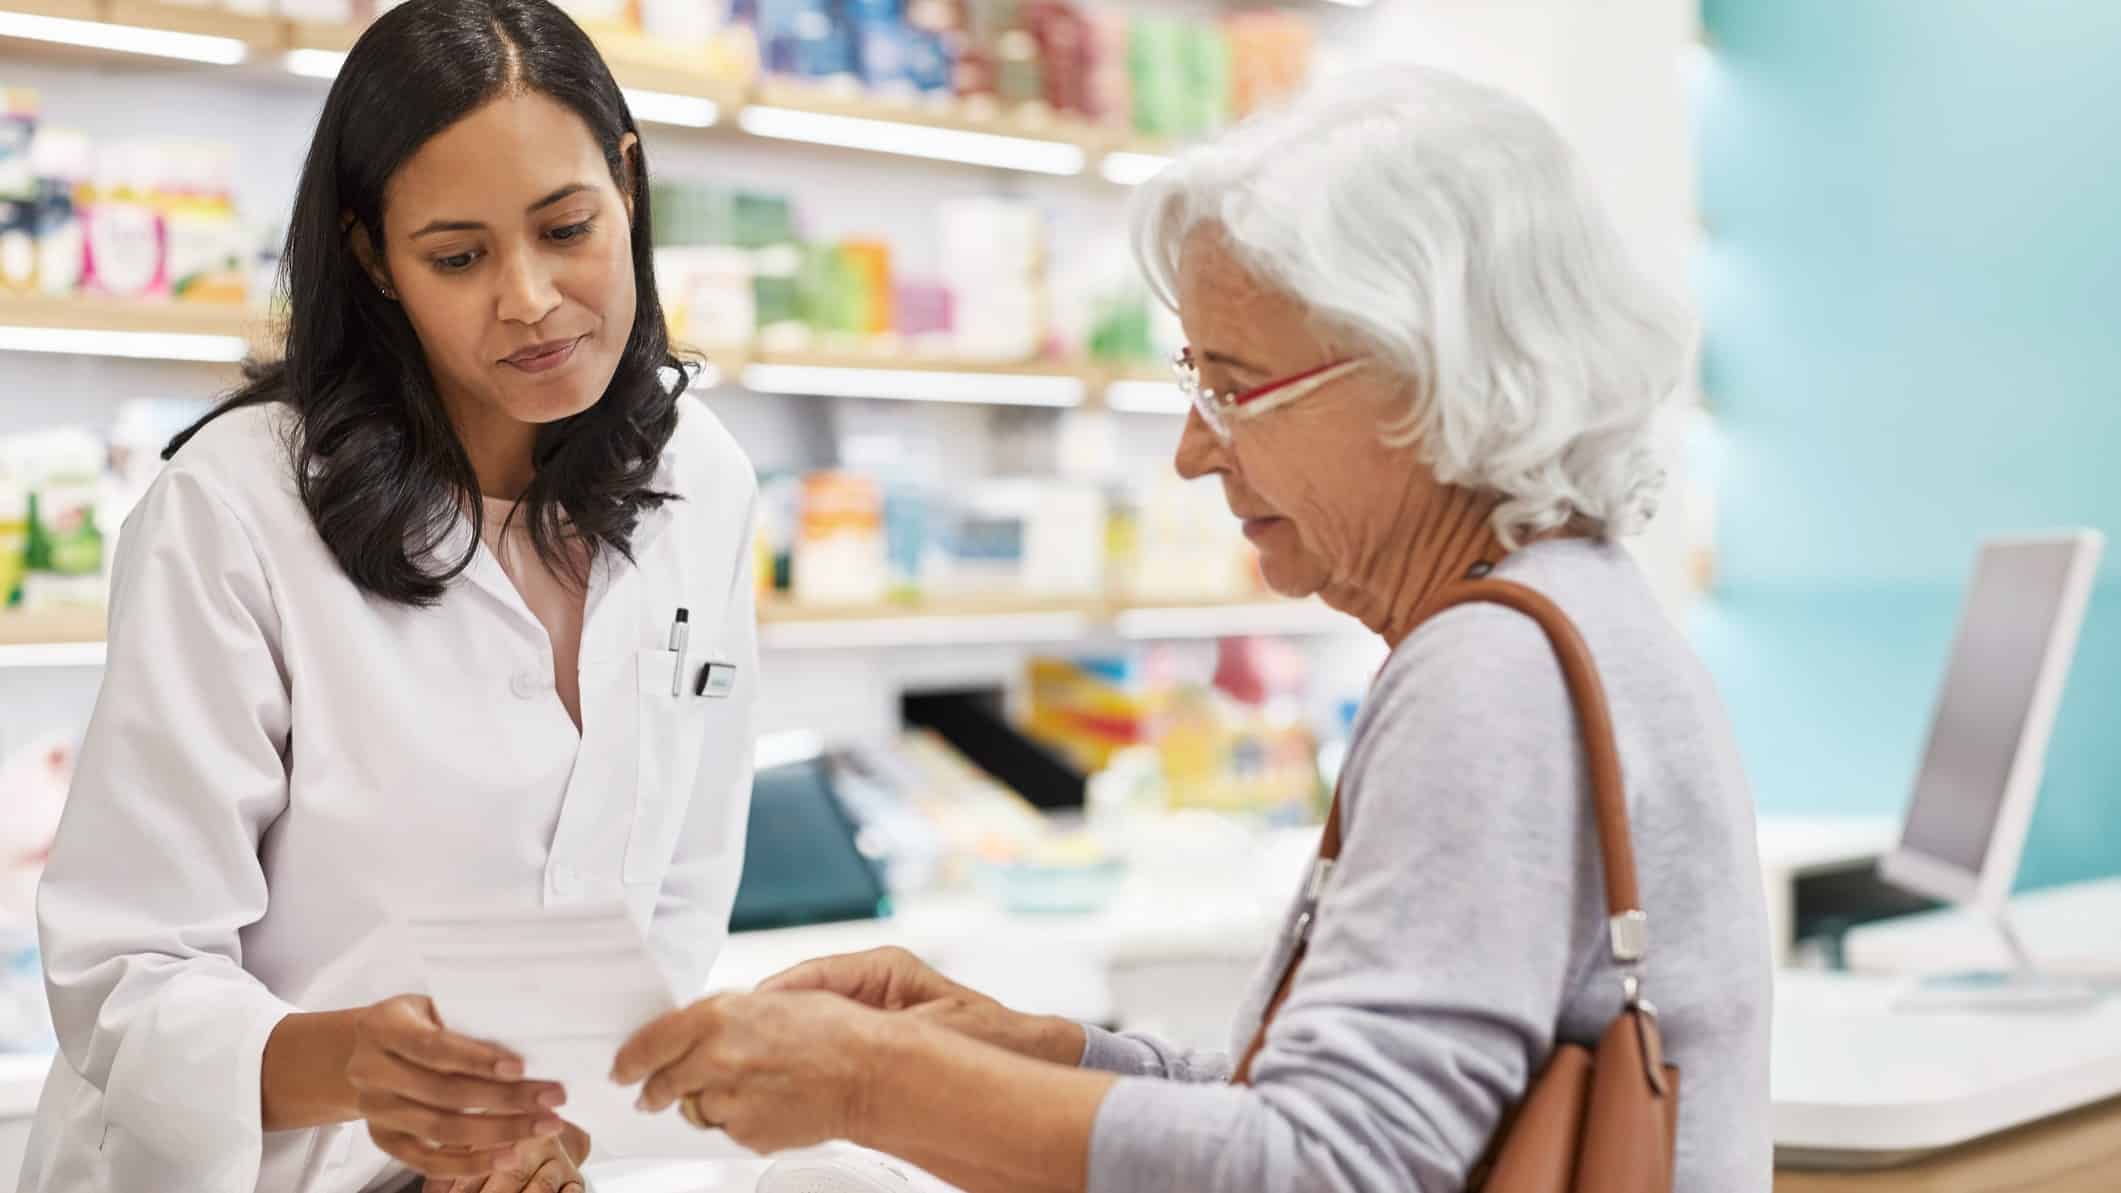 Woman serving customer in pharmacy